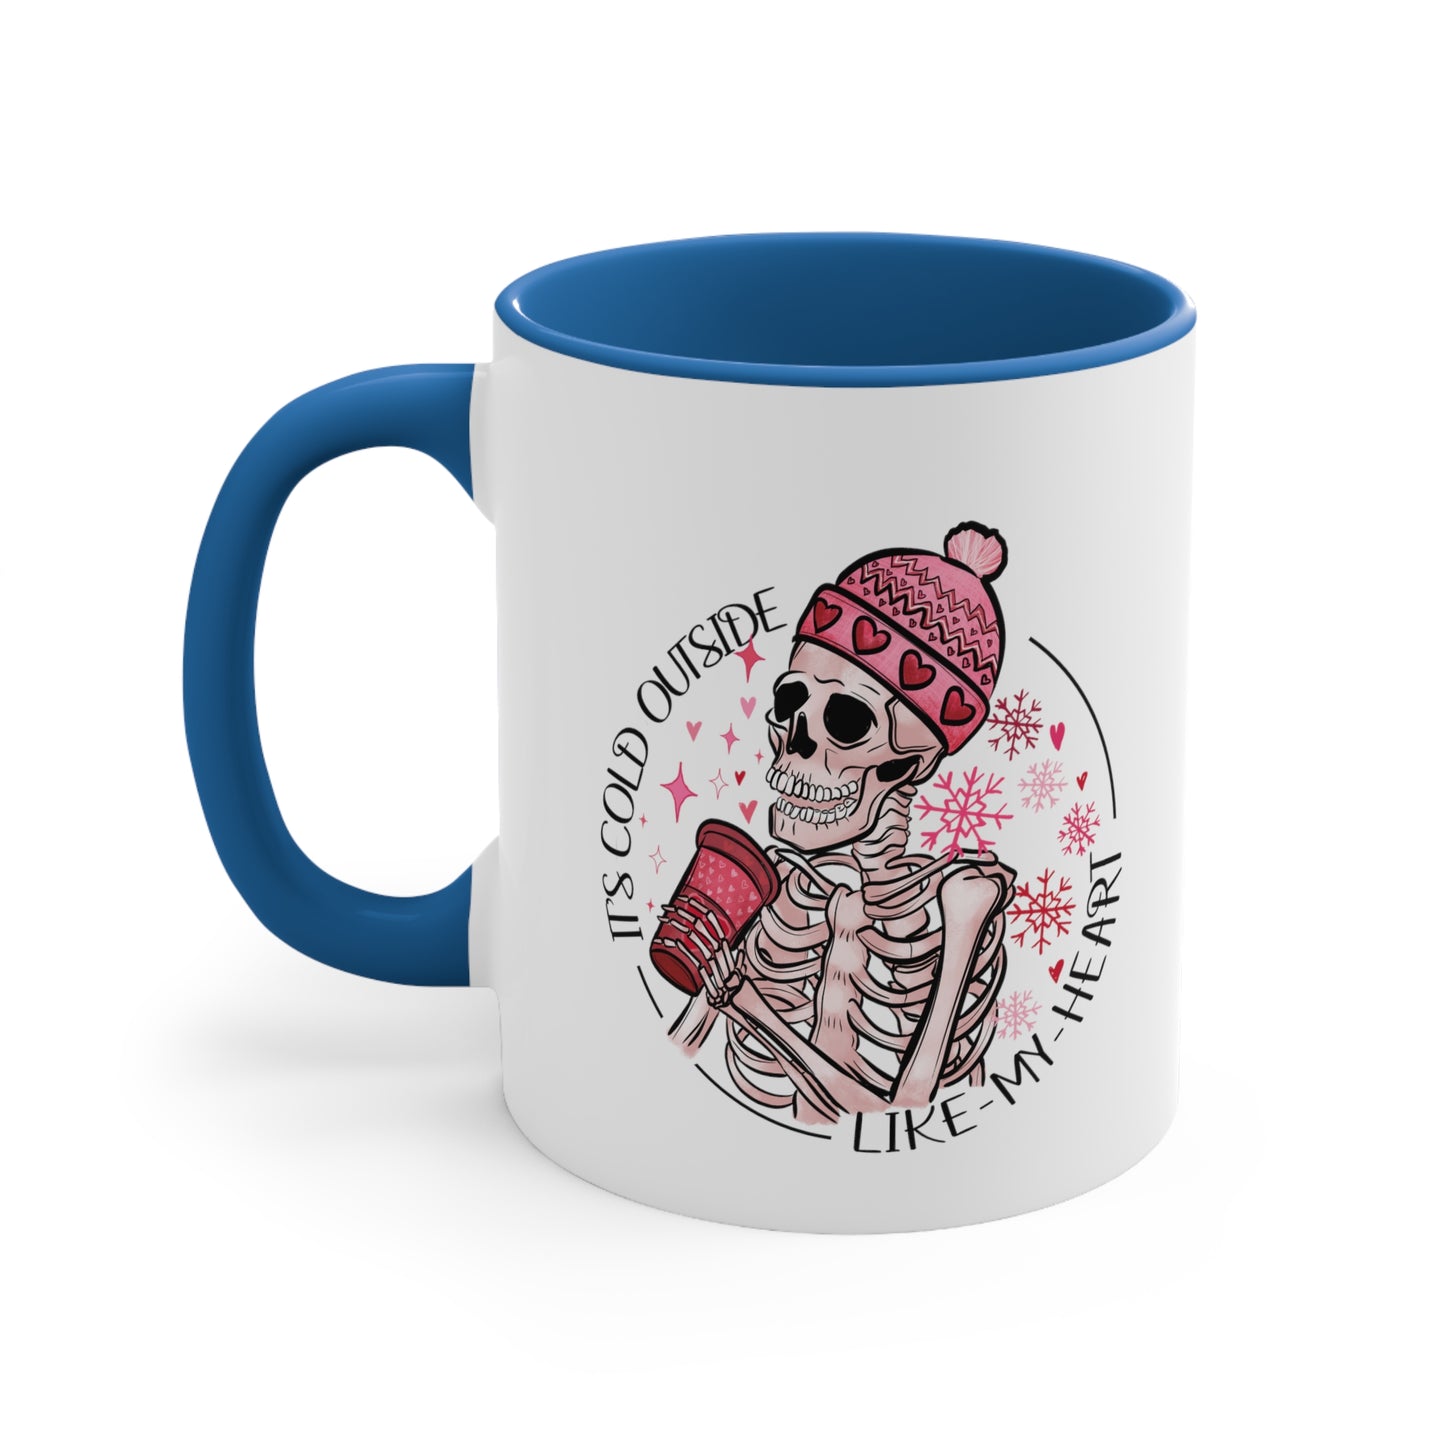 Skeleton Valentine Gothic Accent Coffee Mug, Sarcastic Funny Dark  11oz